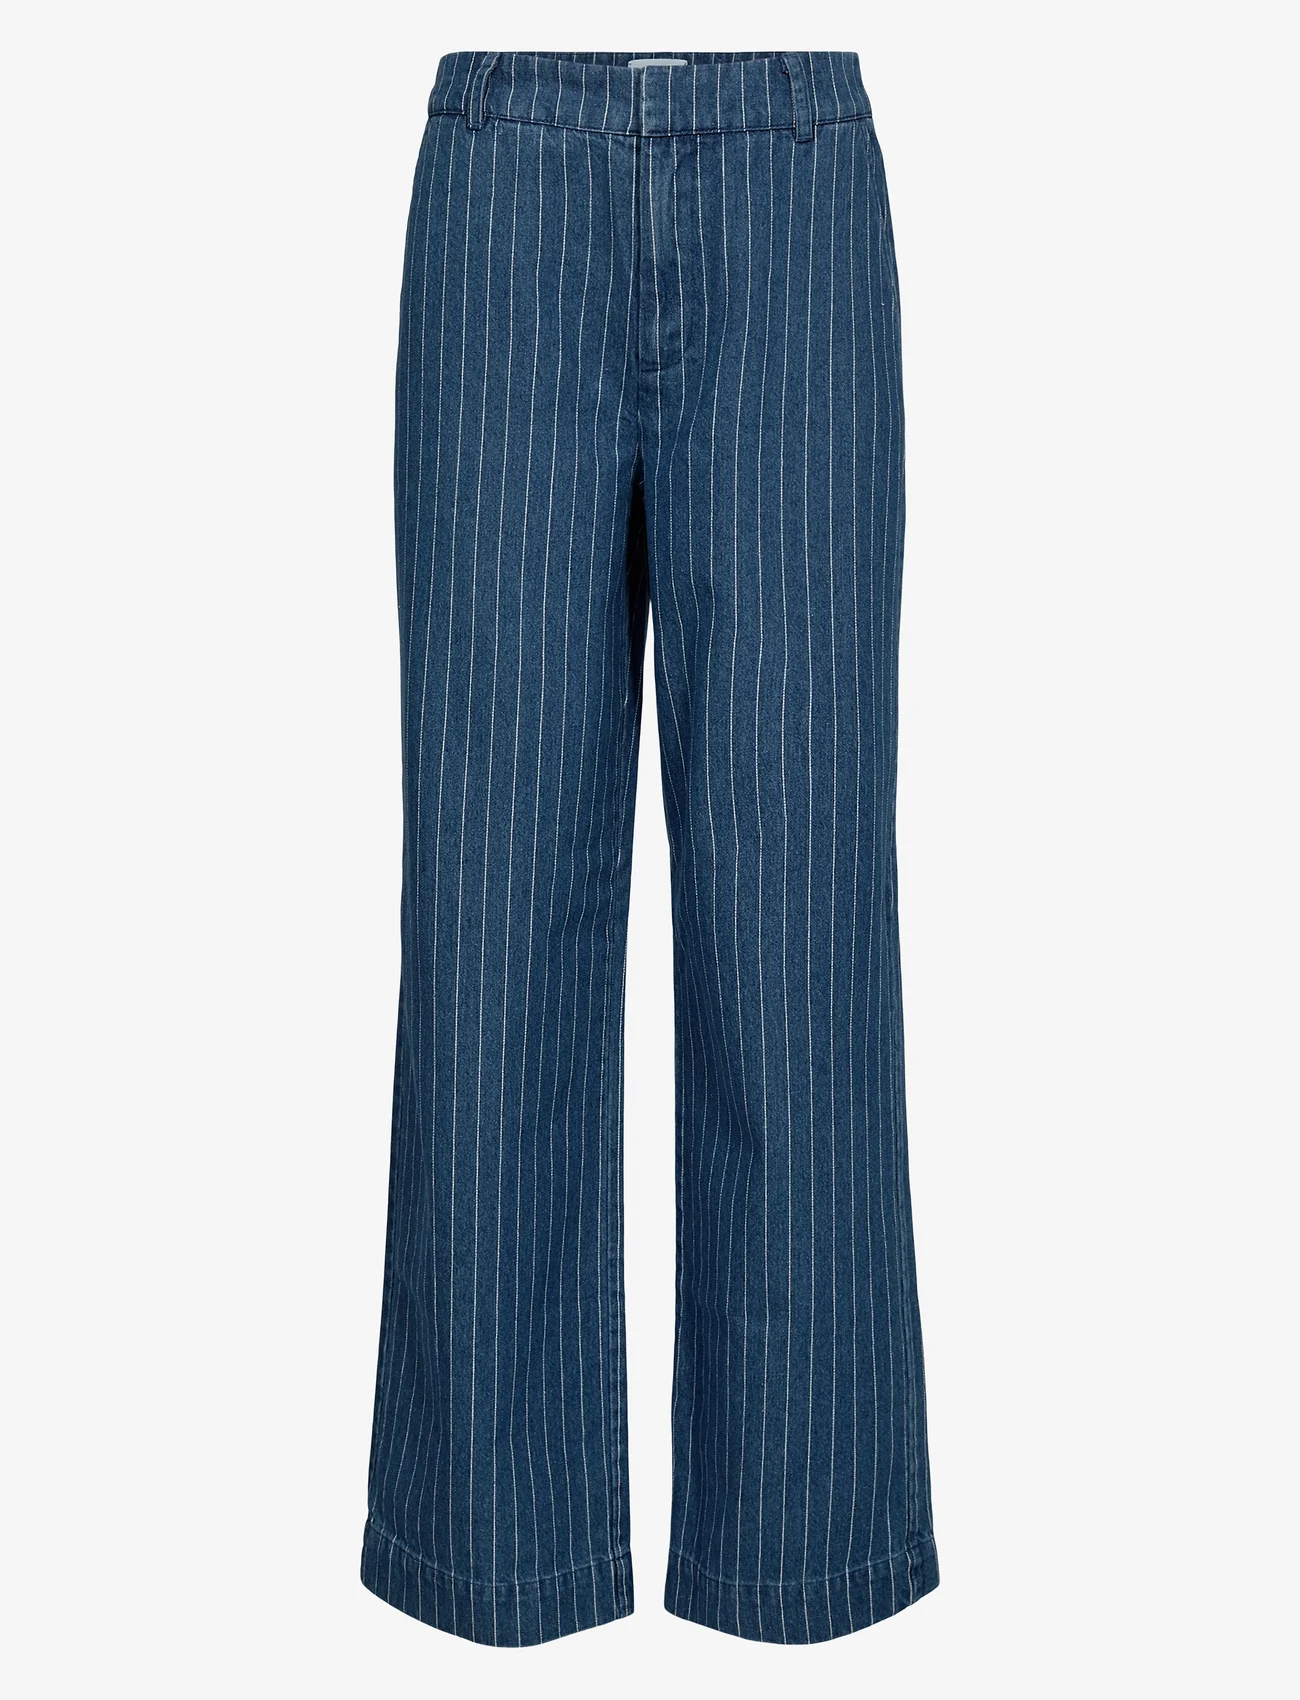 Nümph - NUENITTA PANTS - wide leg trousers - medium blue denim - 0